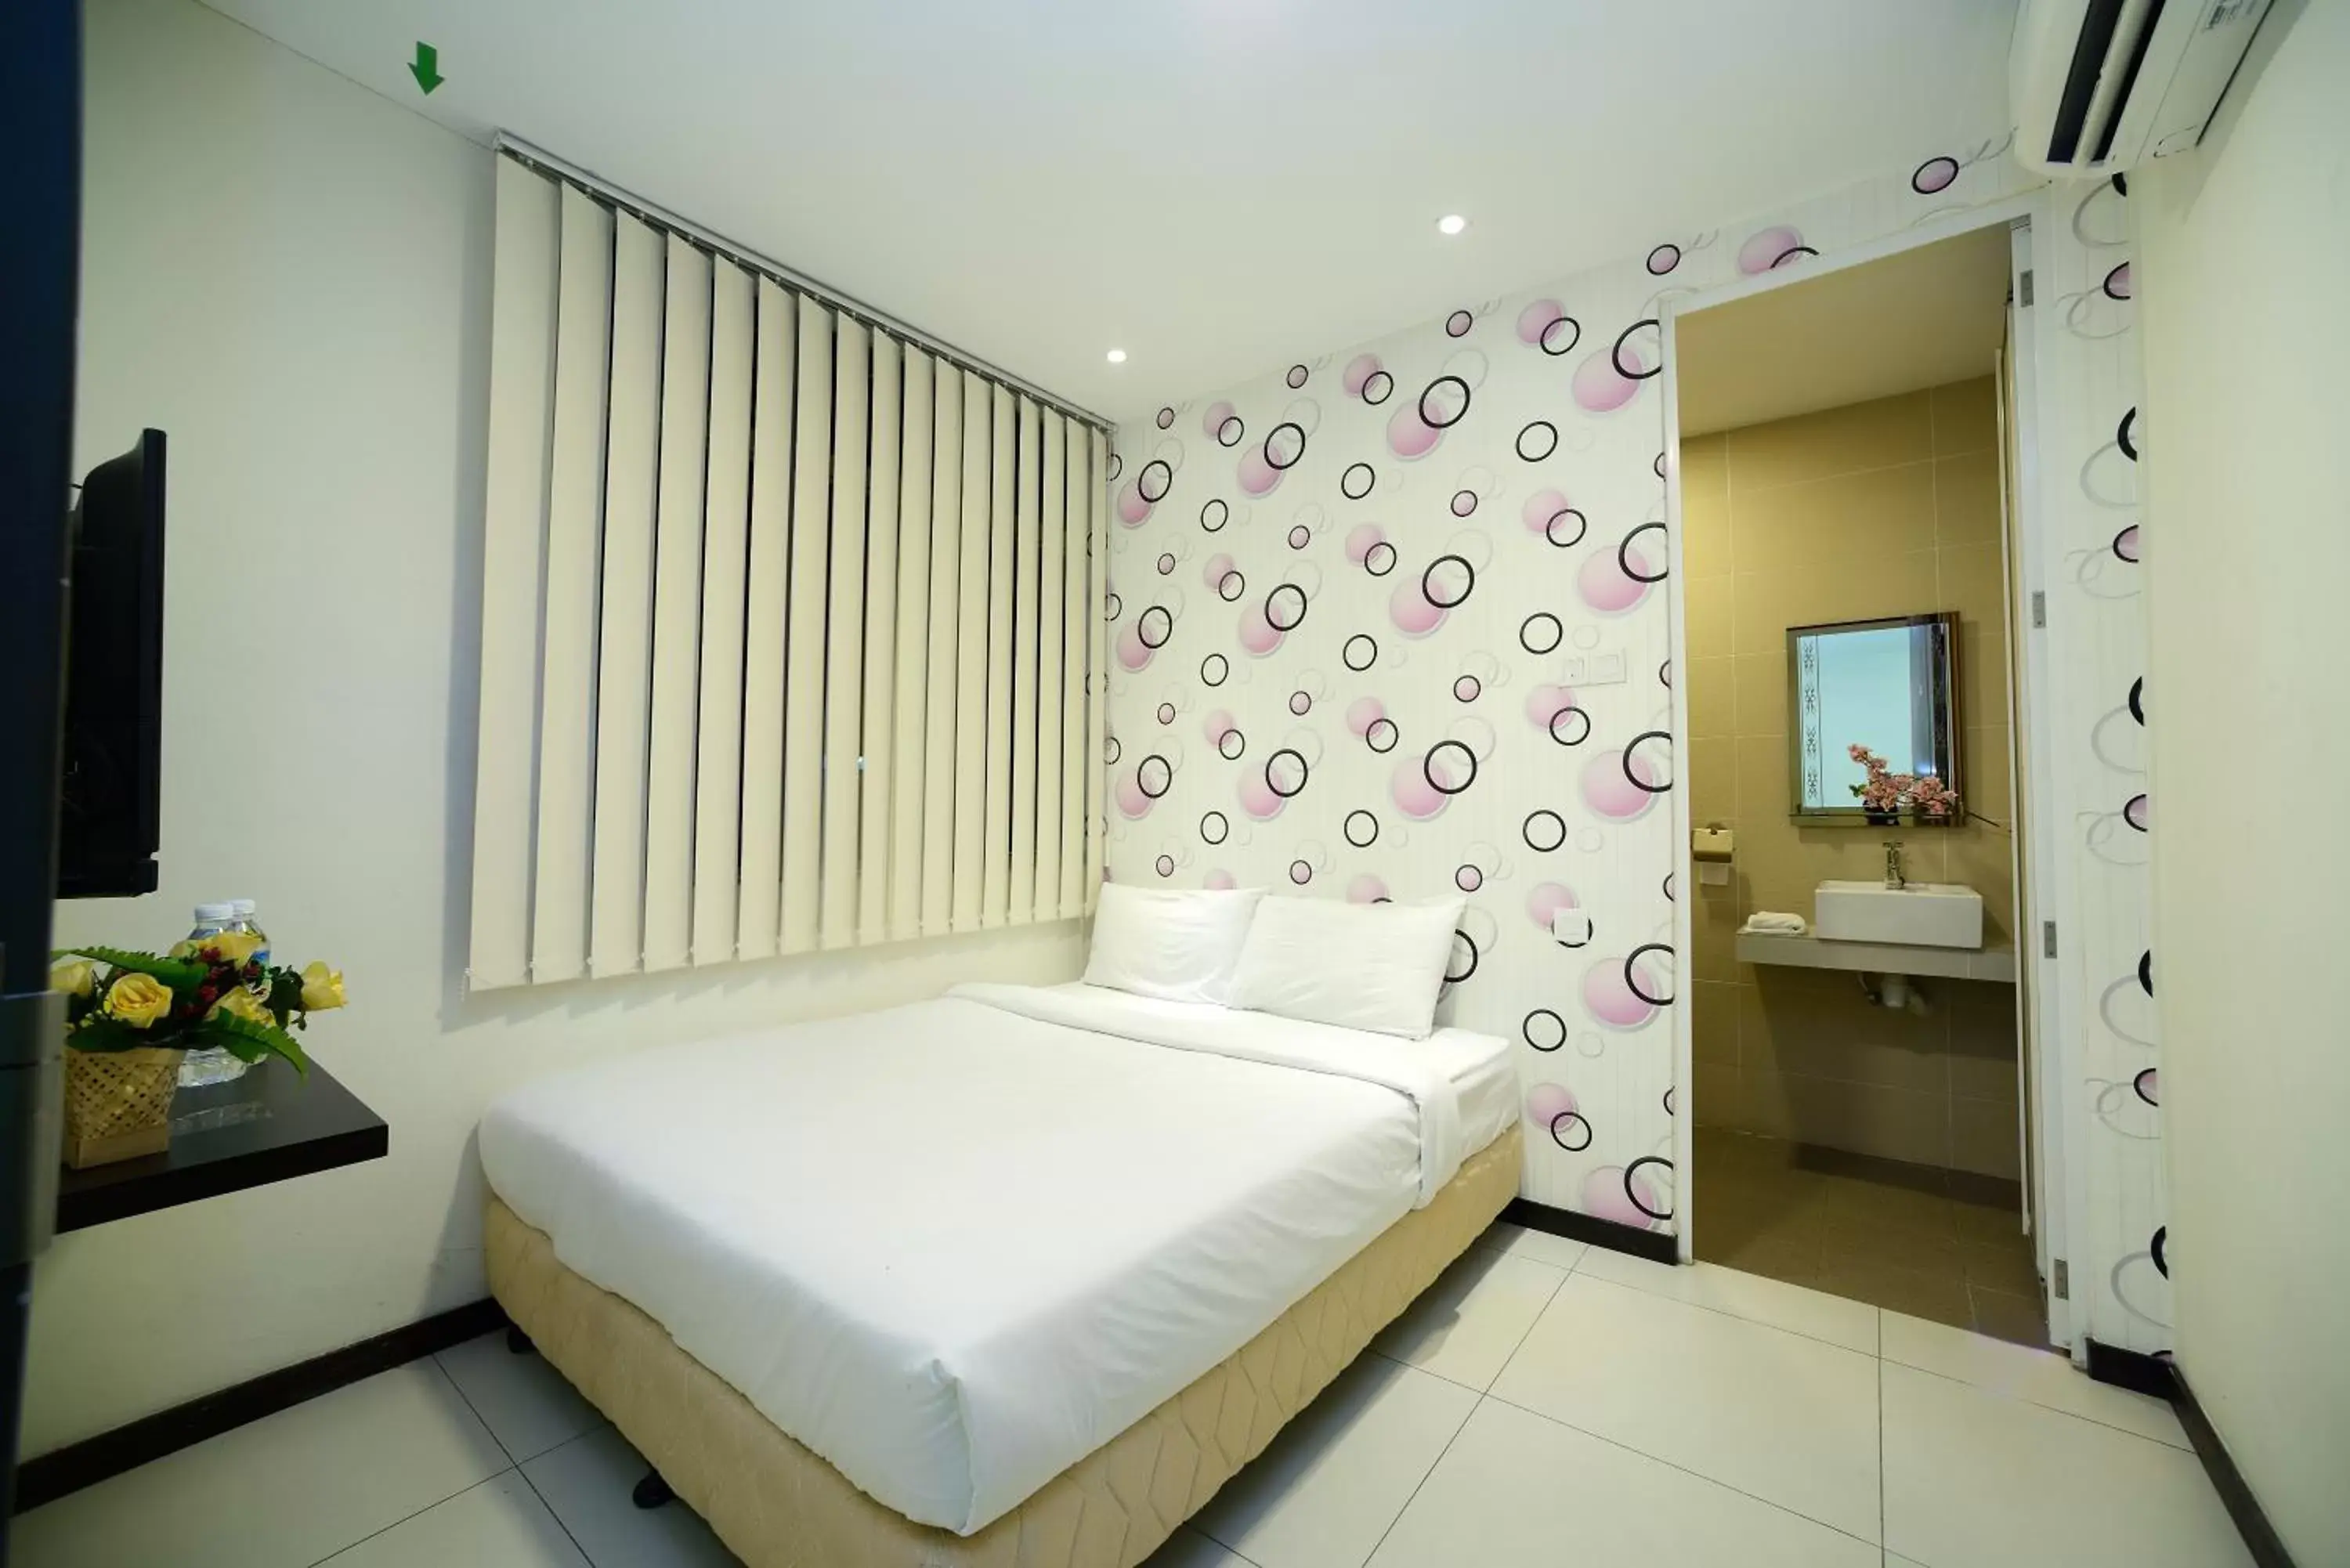 Bed, Room Photo in Casa Hotel near KLIA 1